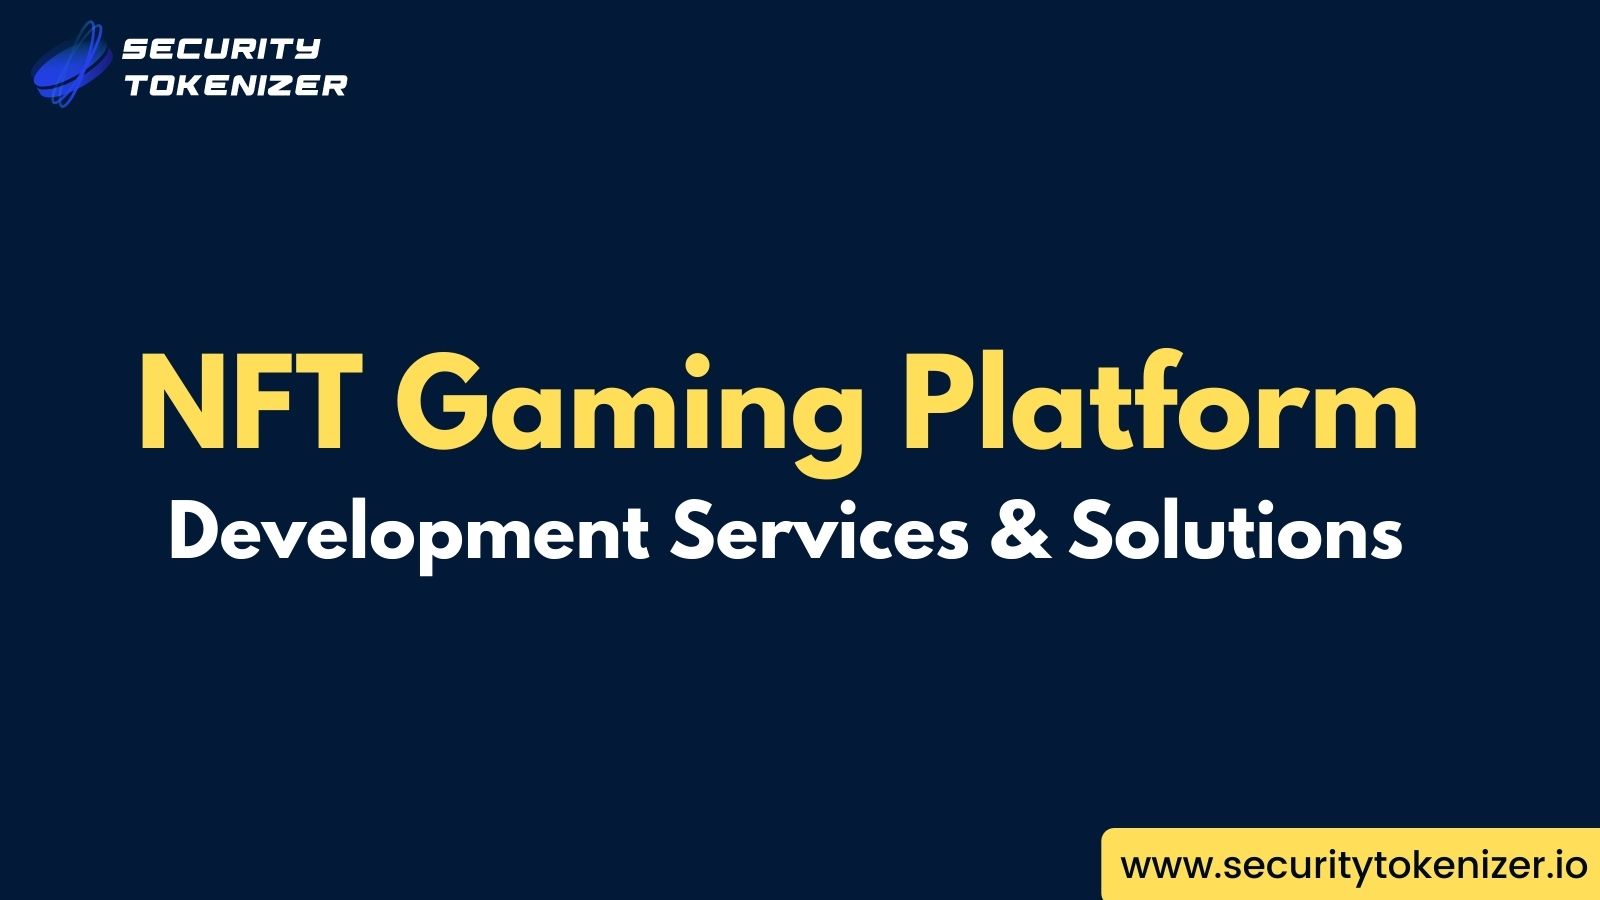 Article about NFT Gaming Platform Development